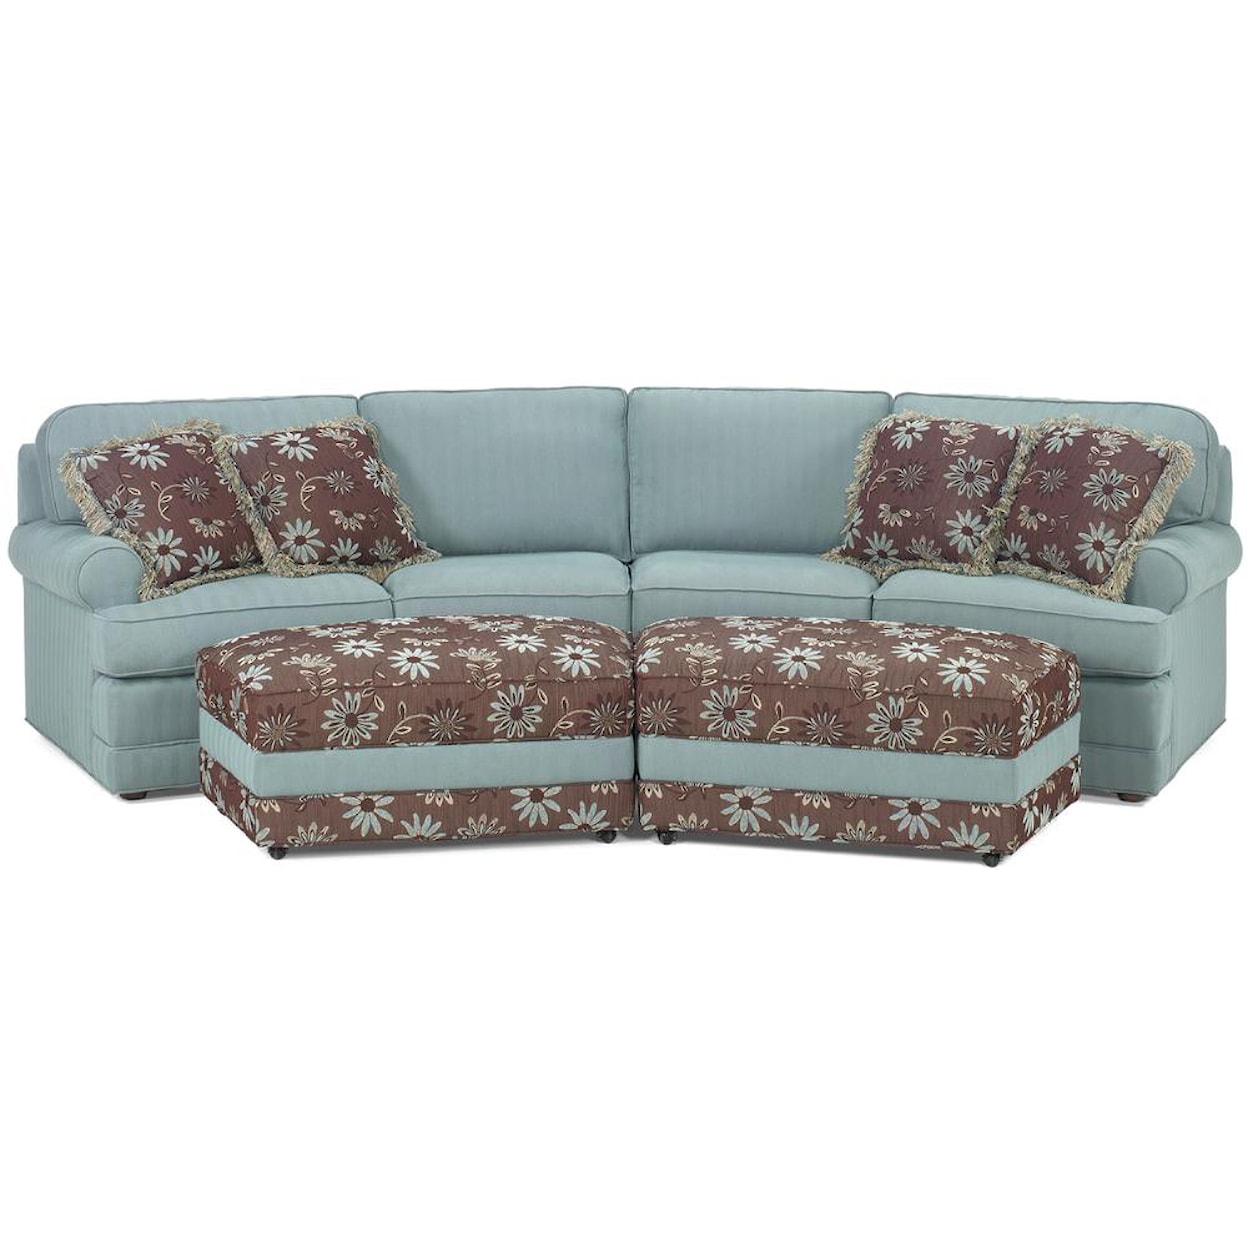 Temple Furniture Tailor Made 2 Piece Conversation Sofa